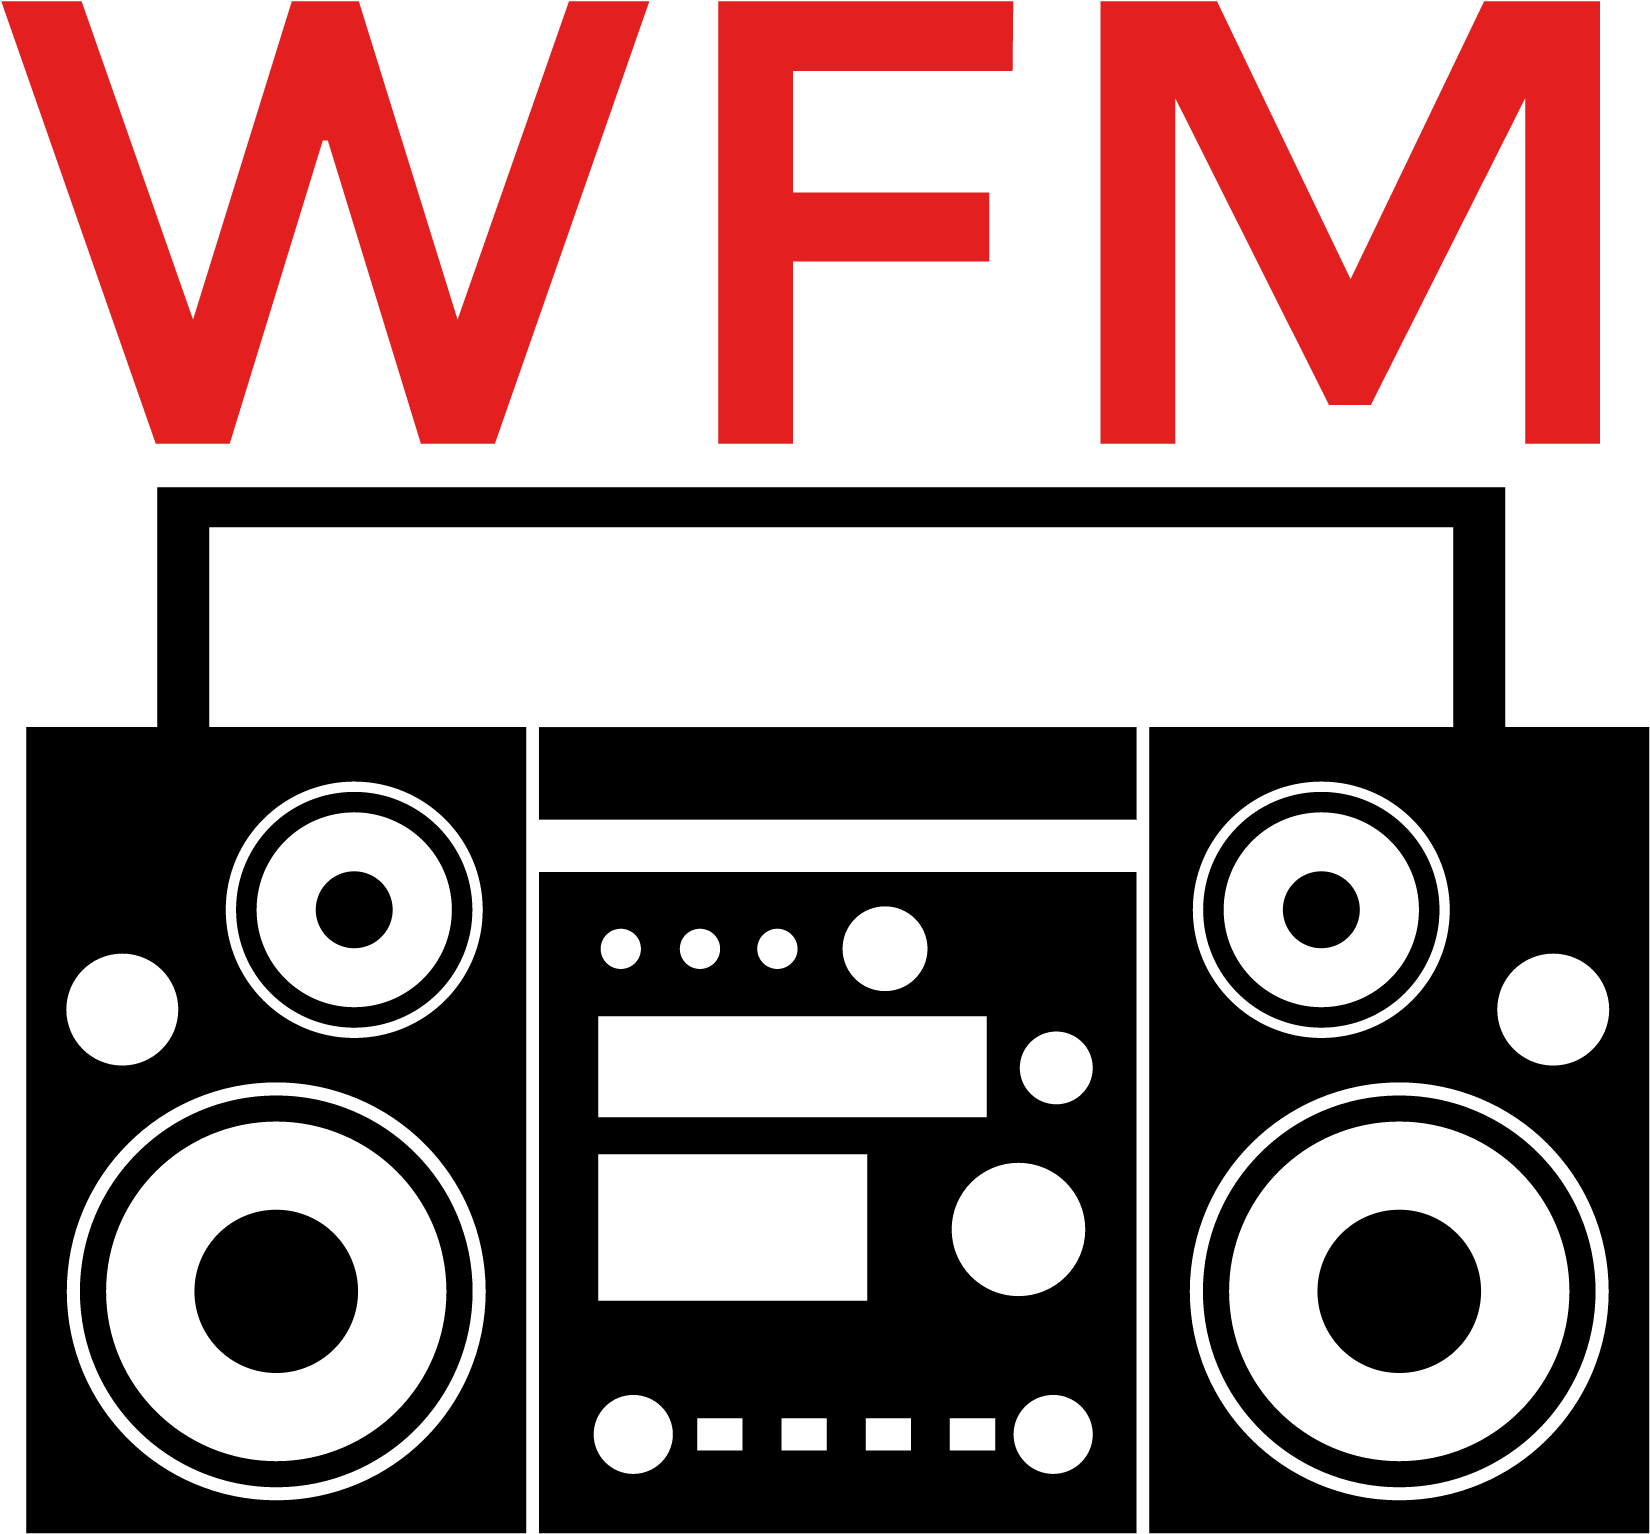 Wfm Radio - Love The 80s Totes (1969x2000)